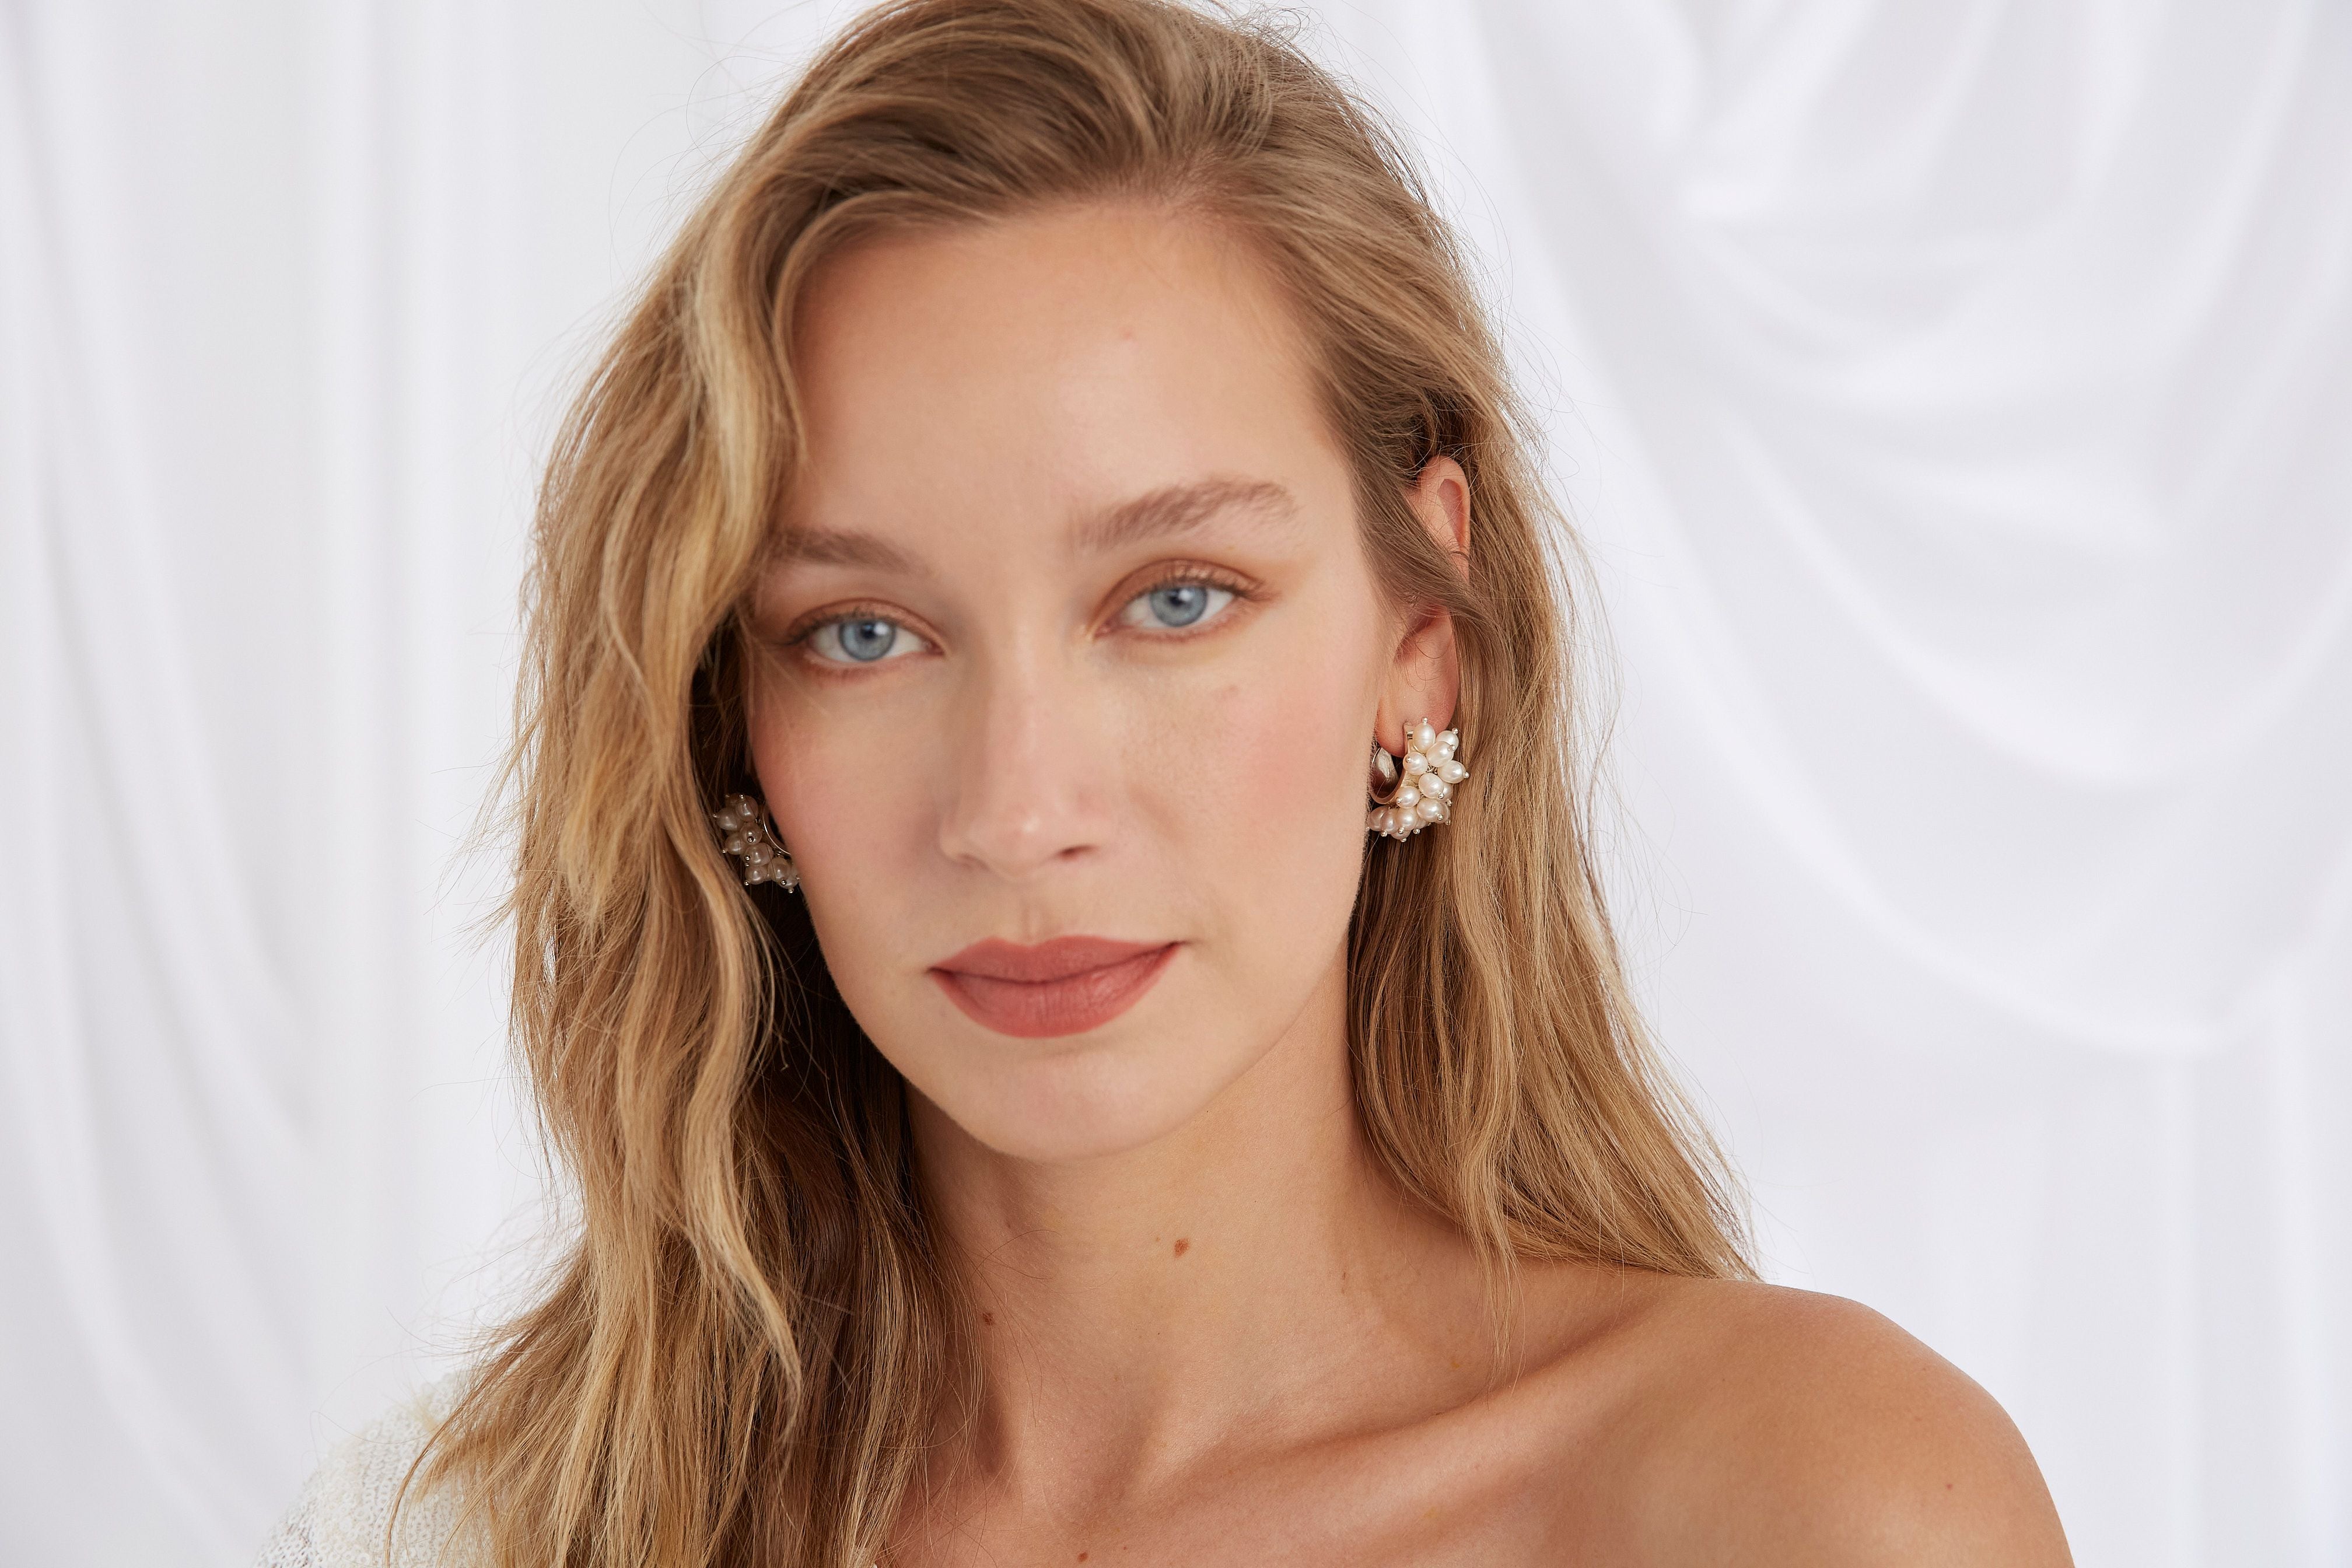 Annabel Gold Pearl Earrings